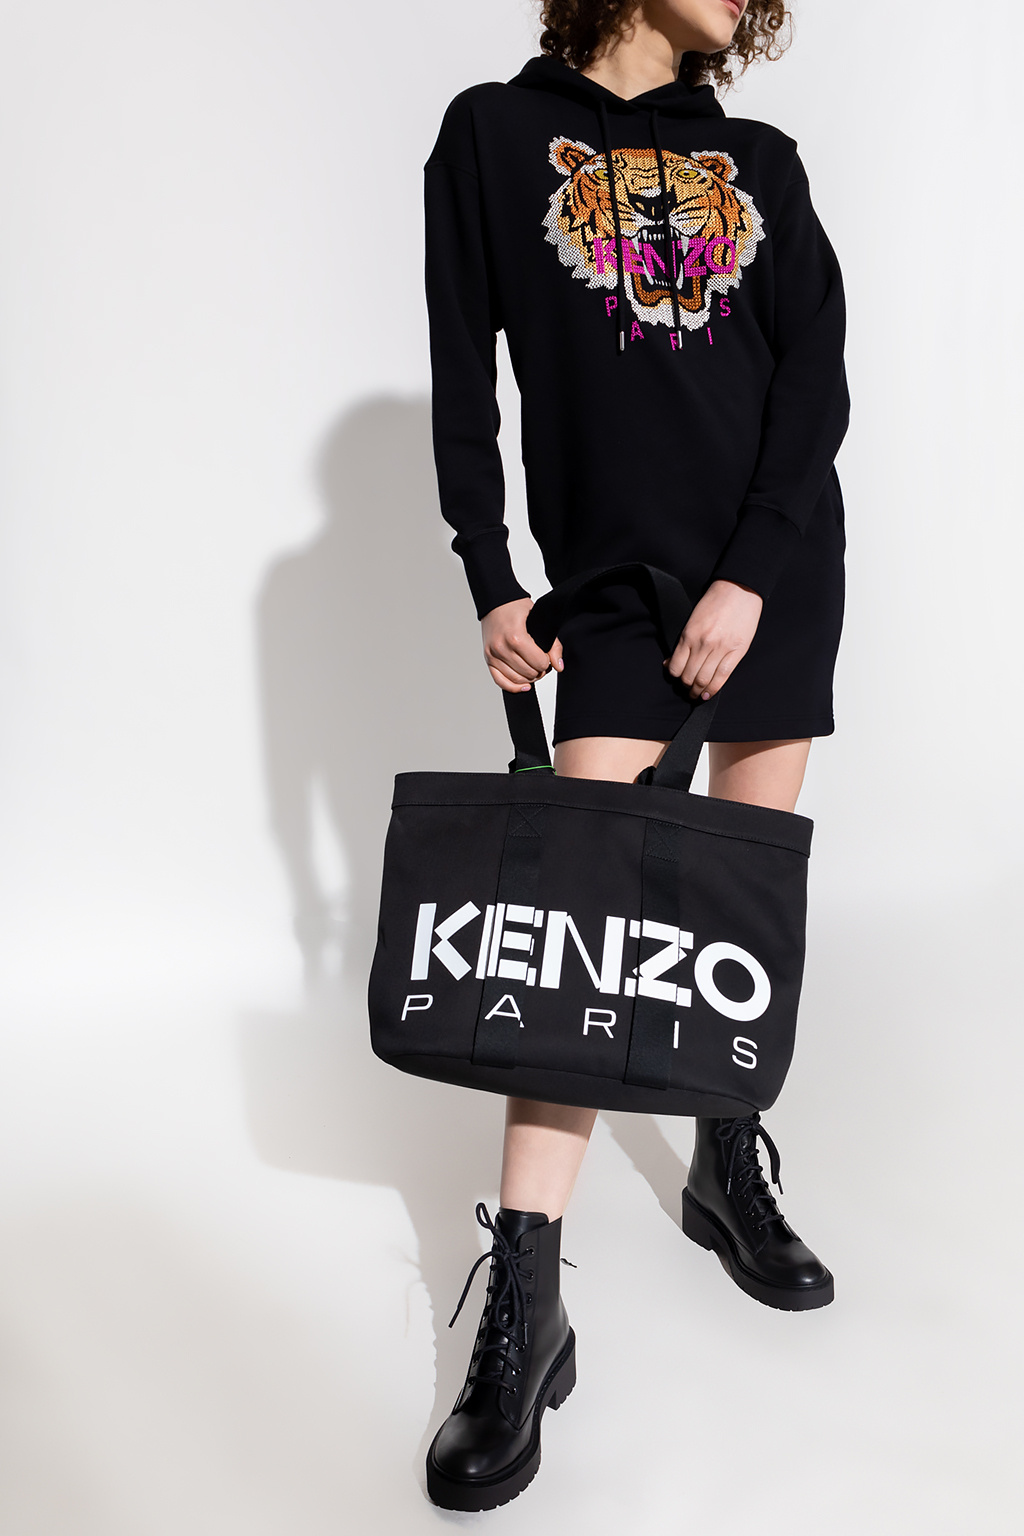 Kenzo marbled-print short-sleeve T-shirt